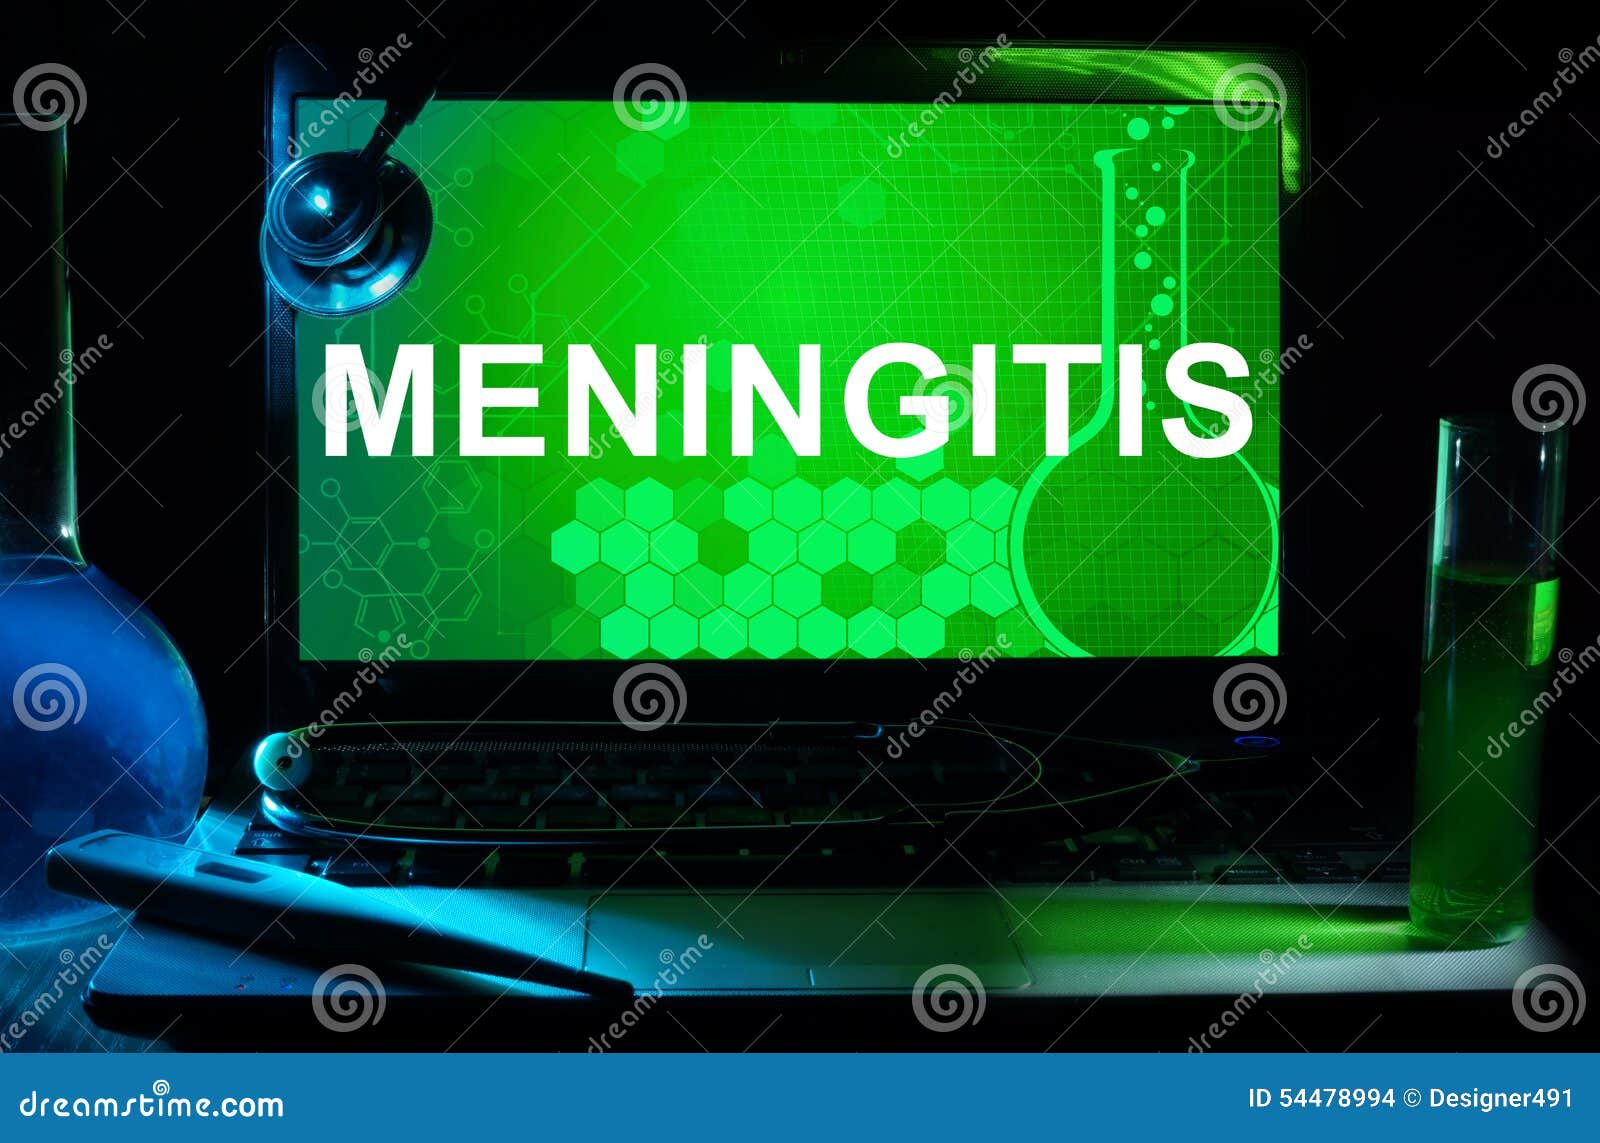 computer with words meningitis.